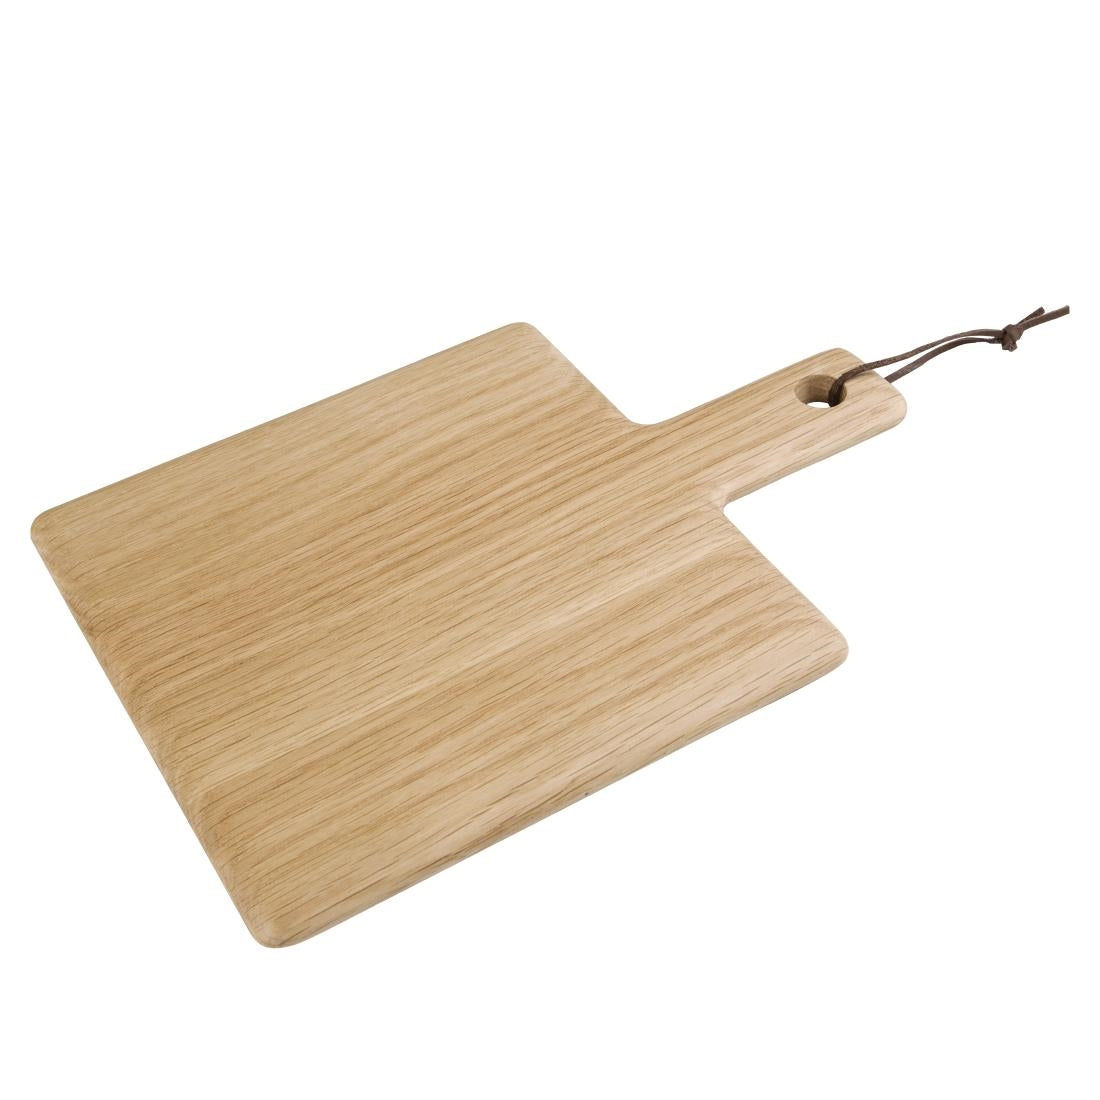 GM260 Olympia Oak Wood Handled Wooden Board Small 230mm